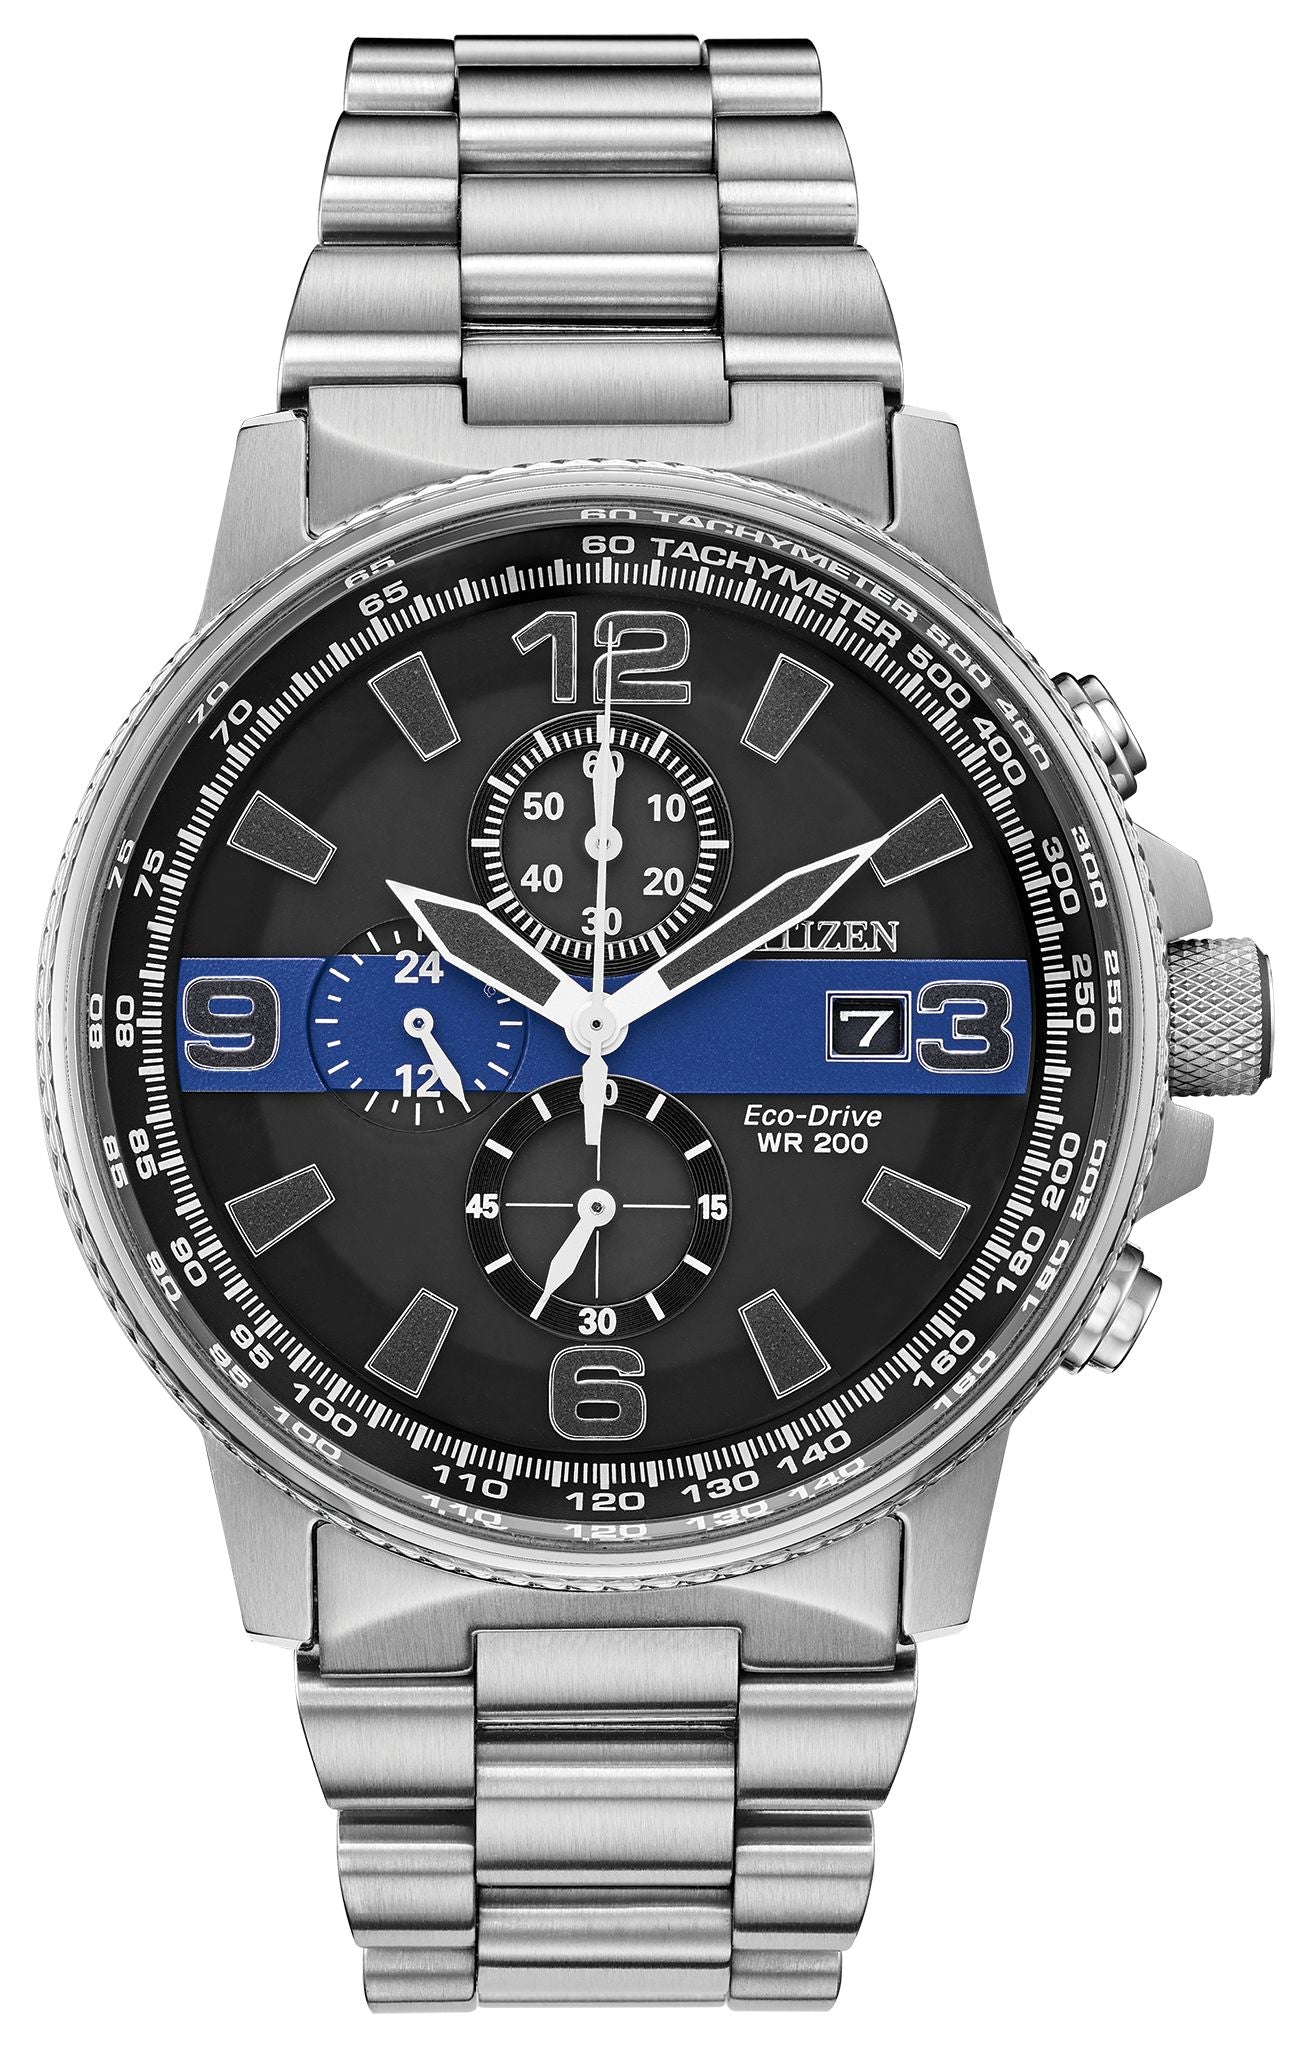 Citizen Men's Thin Blue Line Watch Chronograph 200M WR Eco Drive CA0291-59E